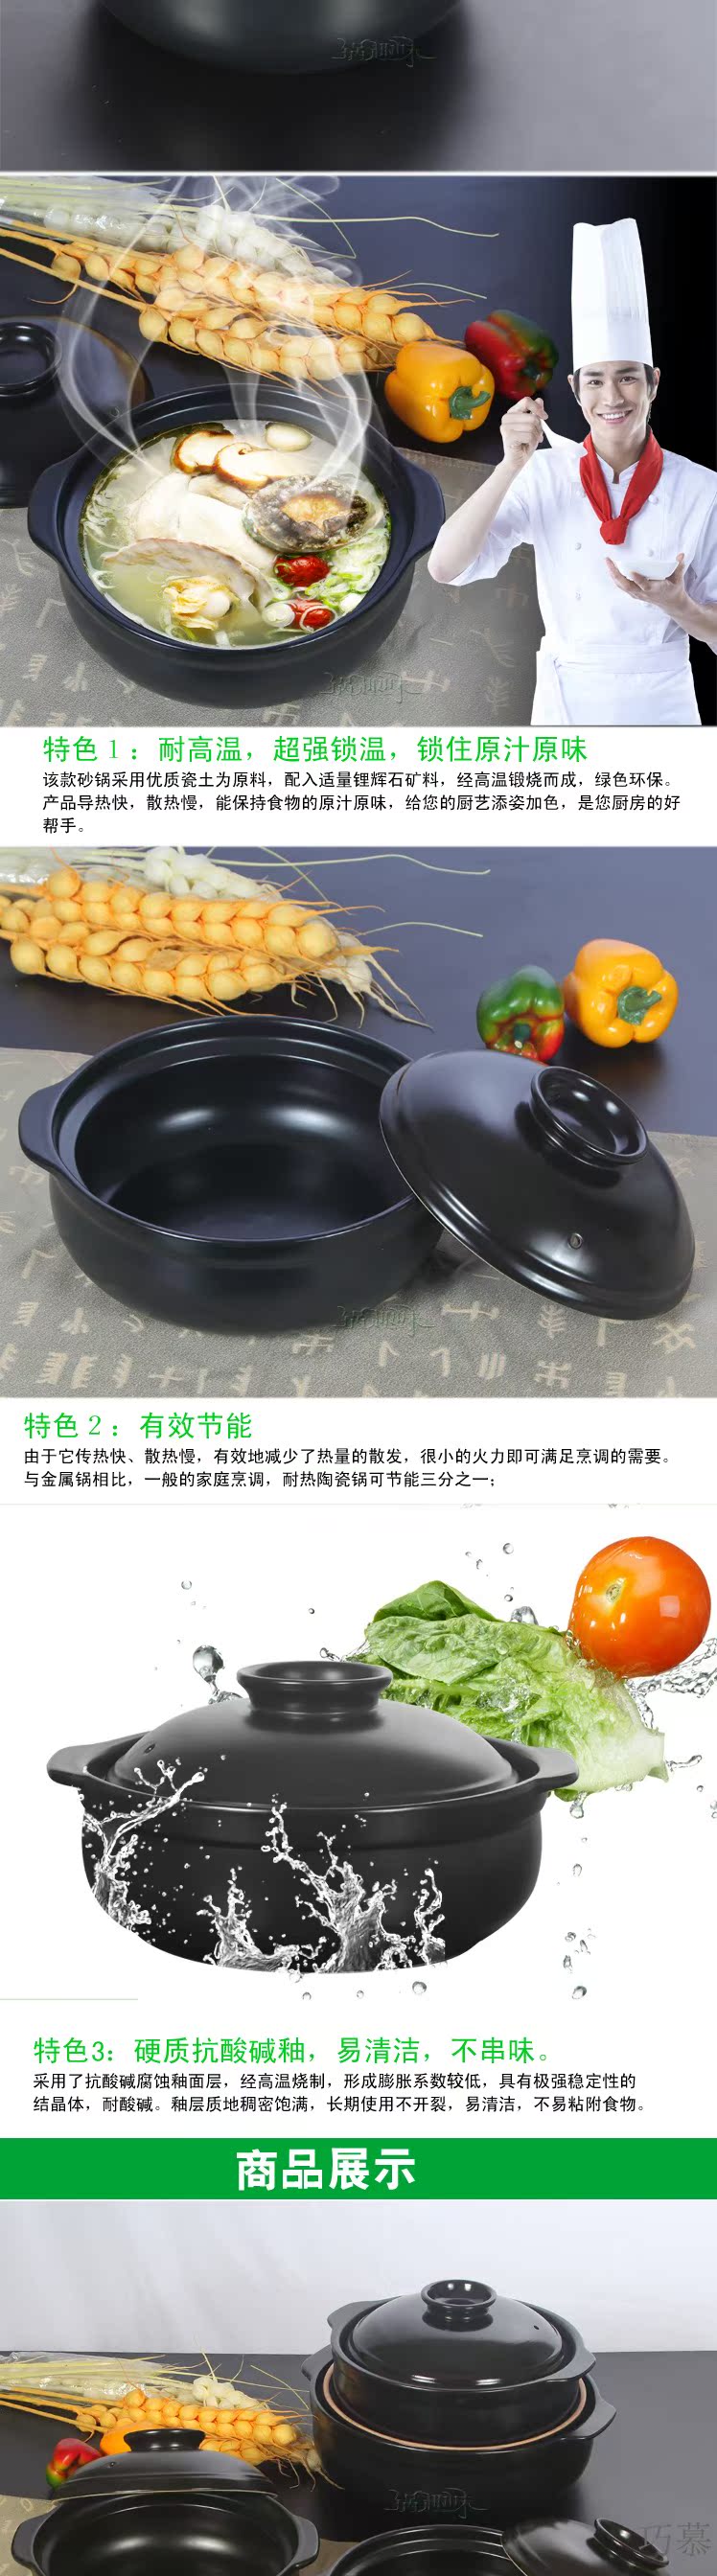 Qiao mu Korean casserole stew high - temperature ceramic soup soup rice rice such as casserole